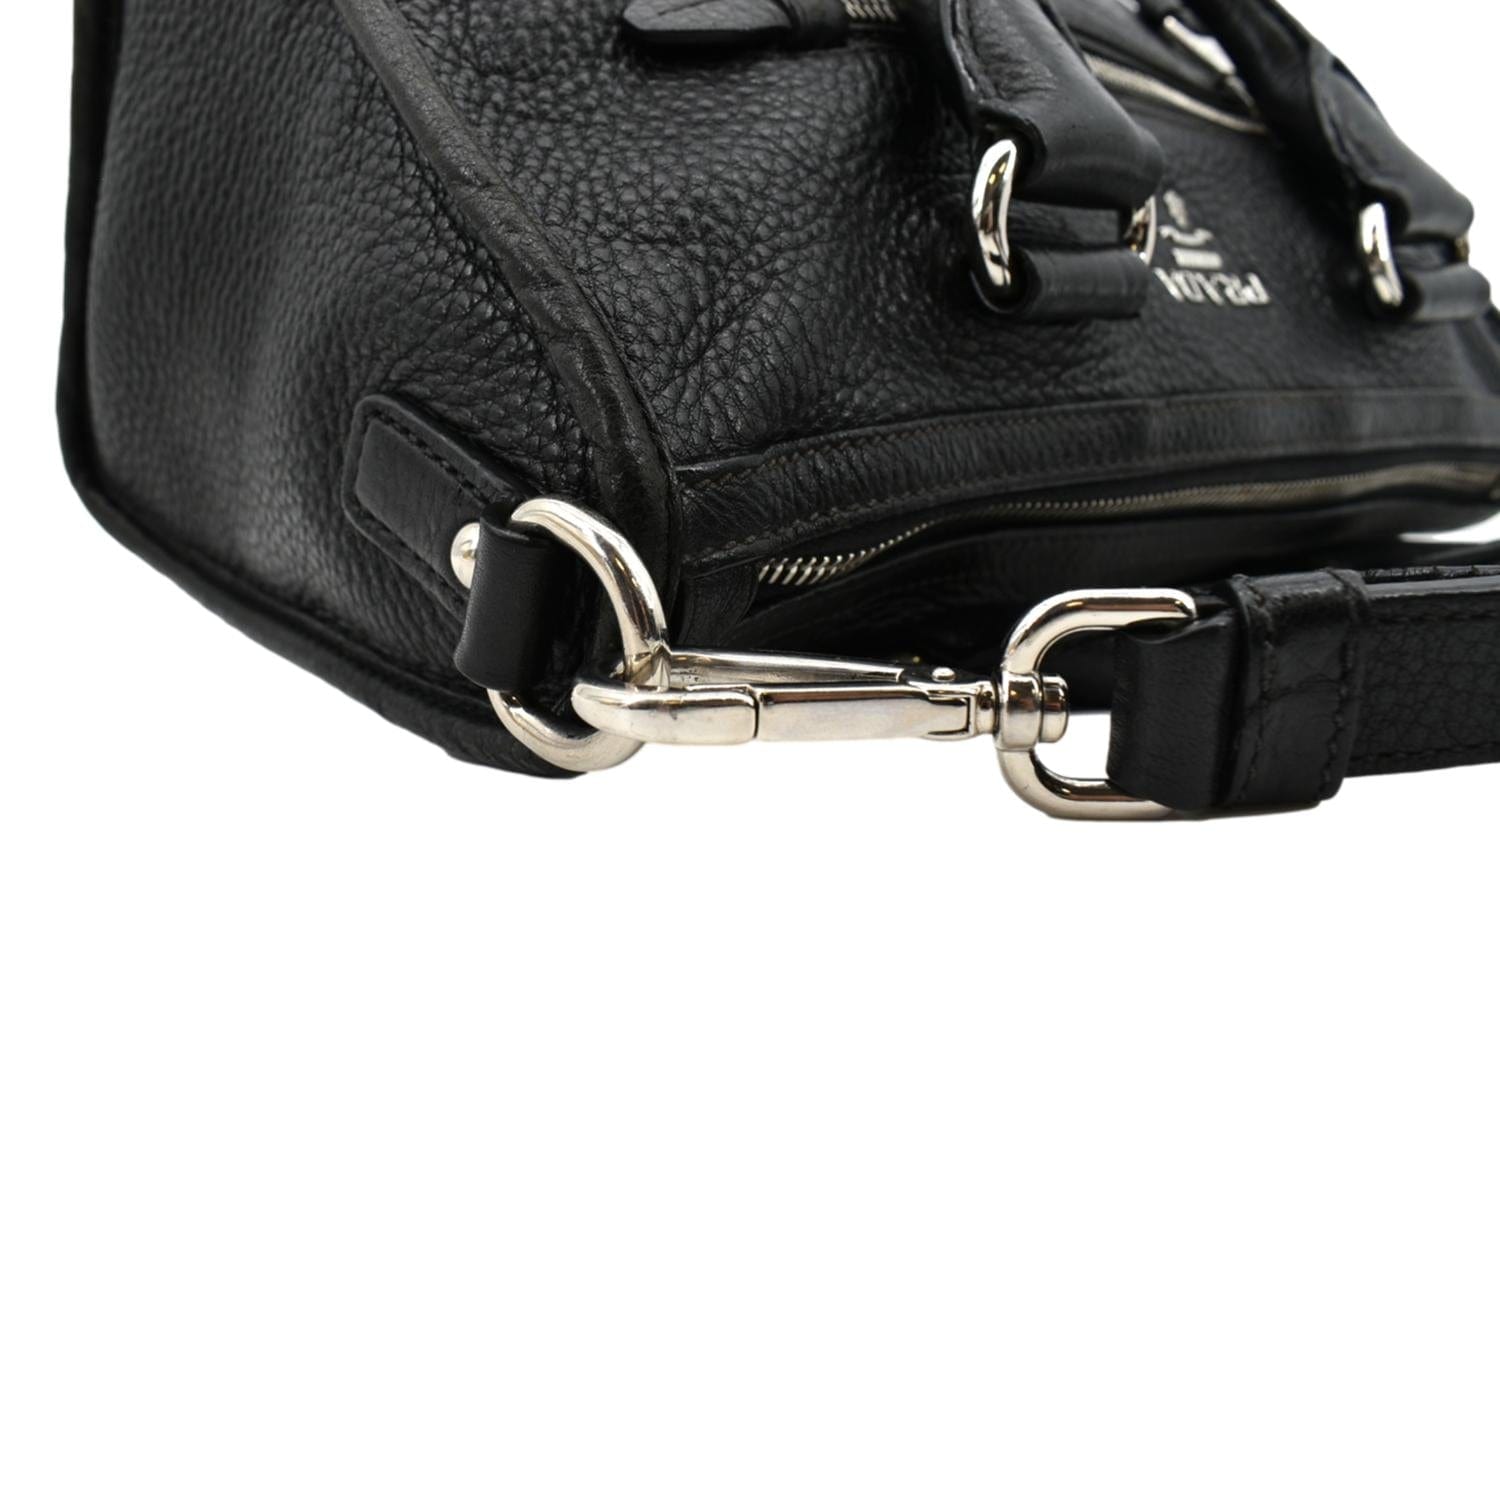 Prada Black Vitello Leather Crossbody Bag